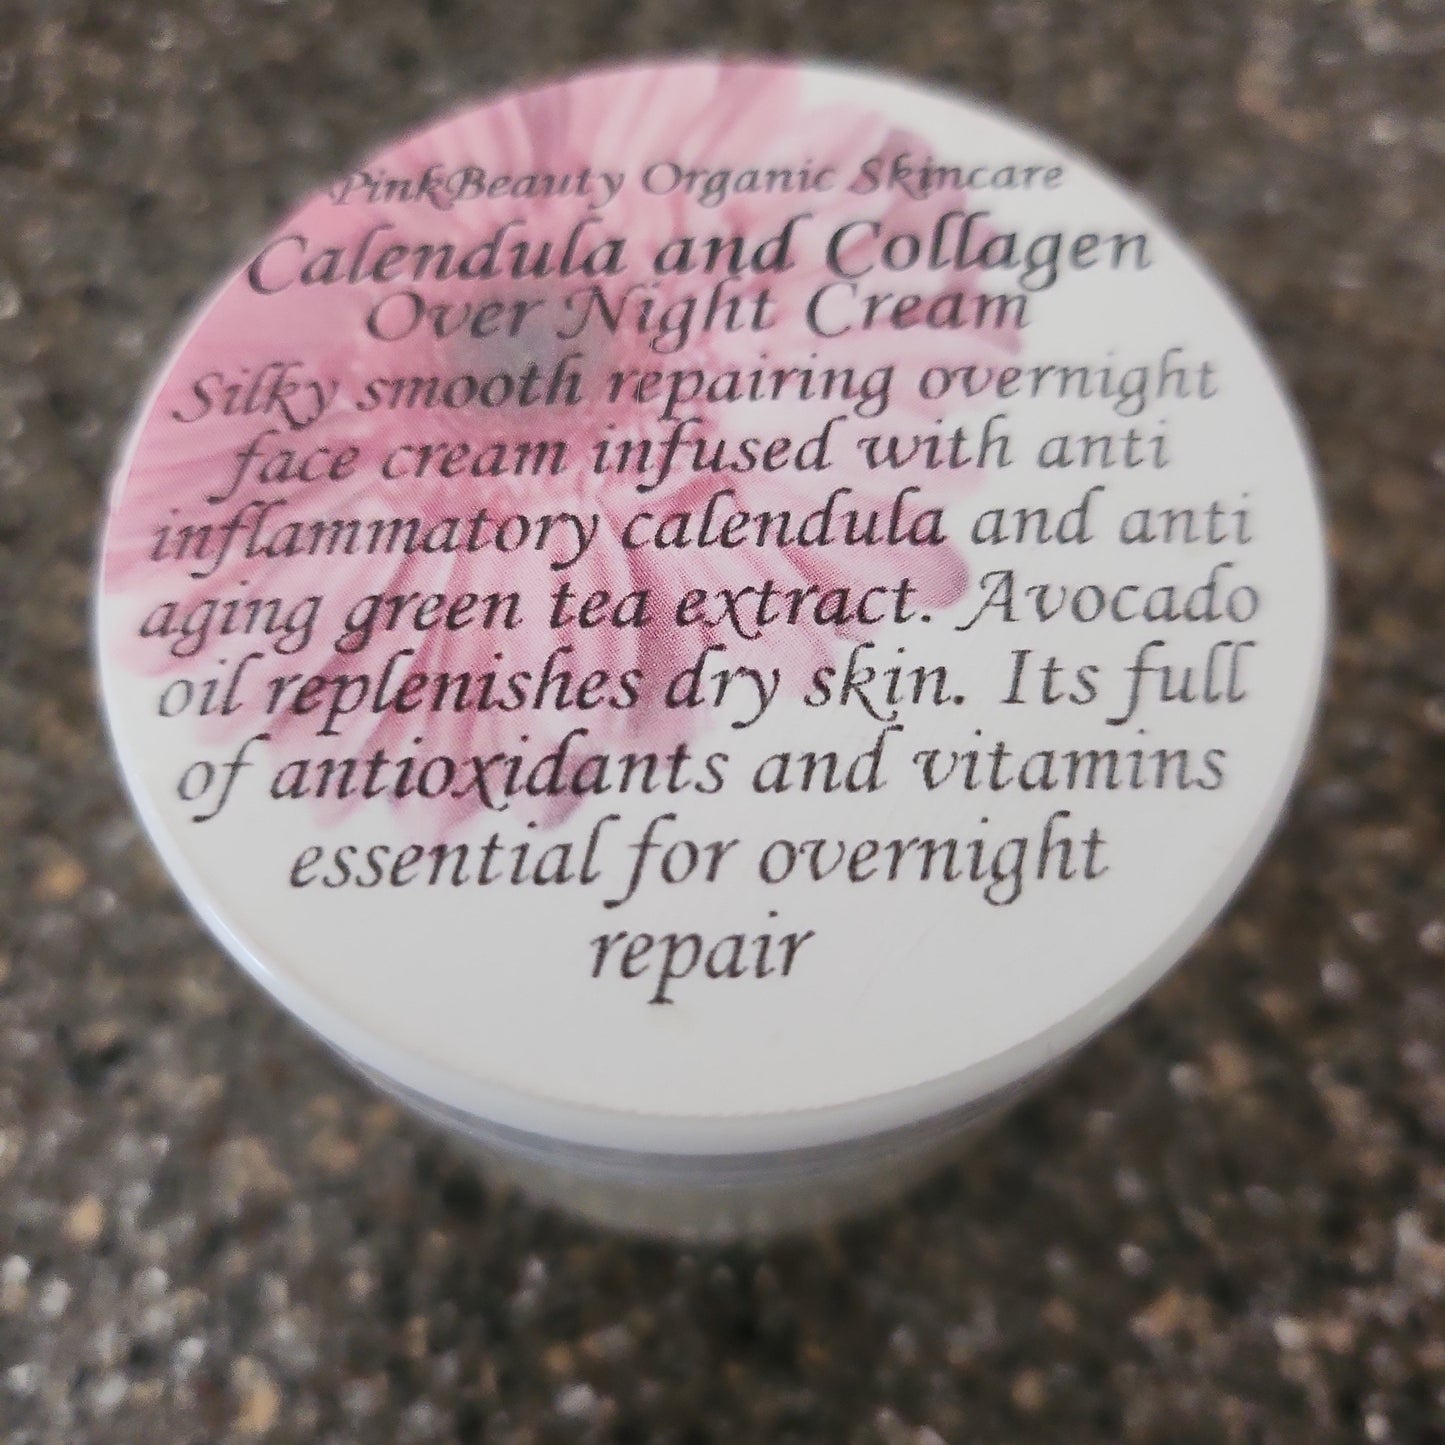 Over Night Cream Calendula and Collagen